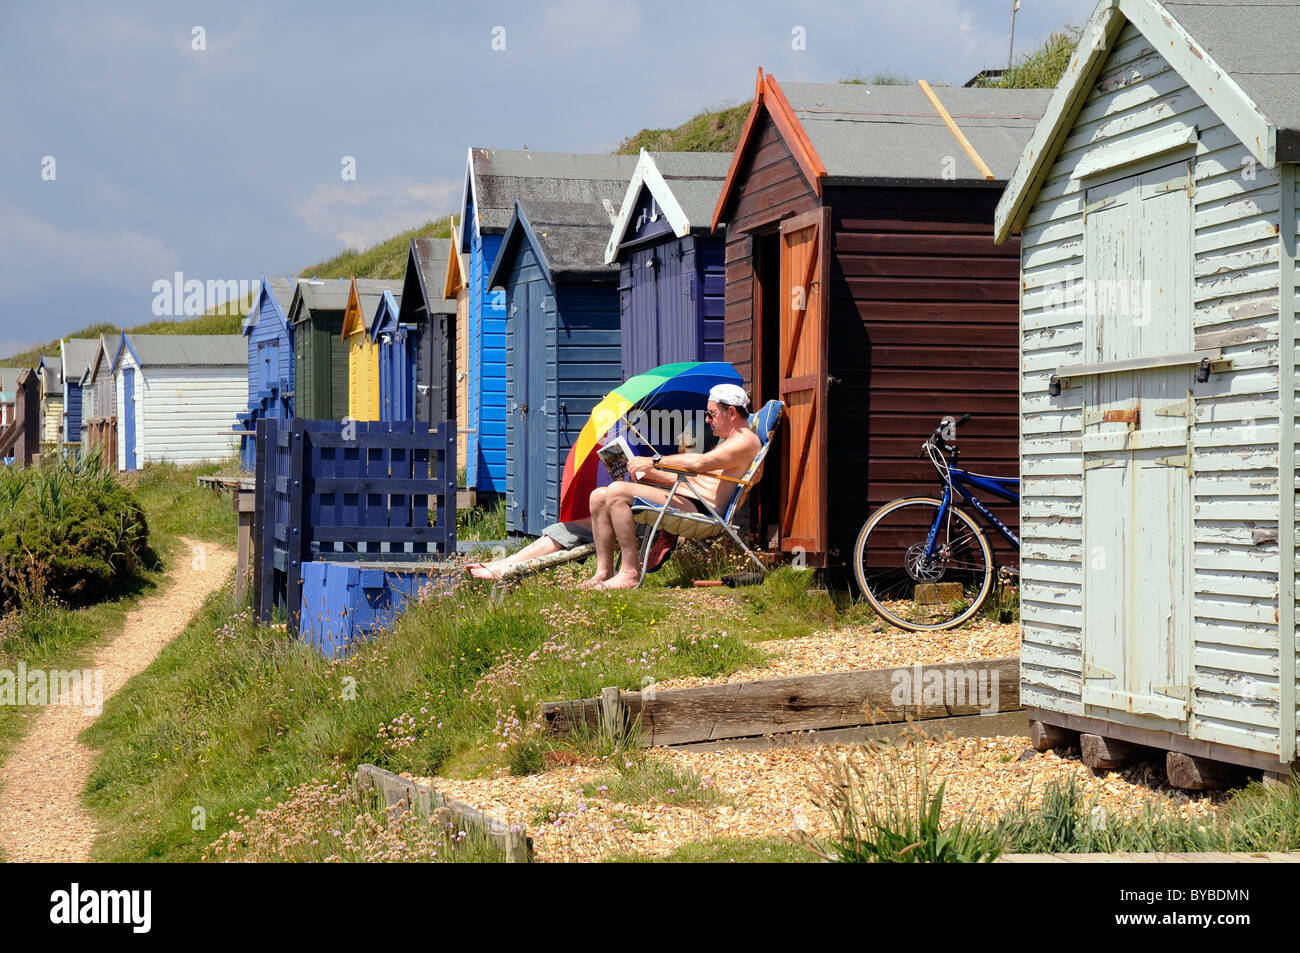 Cabañas de playa en Costa southengland uk inglaterra europa Foto de stock